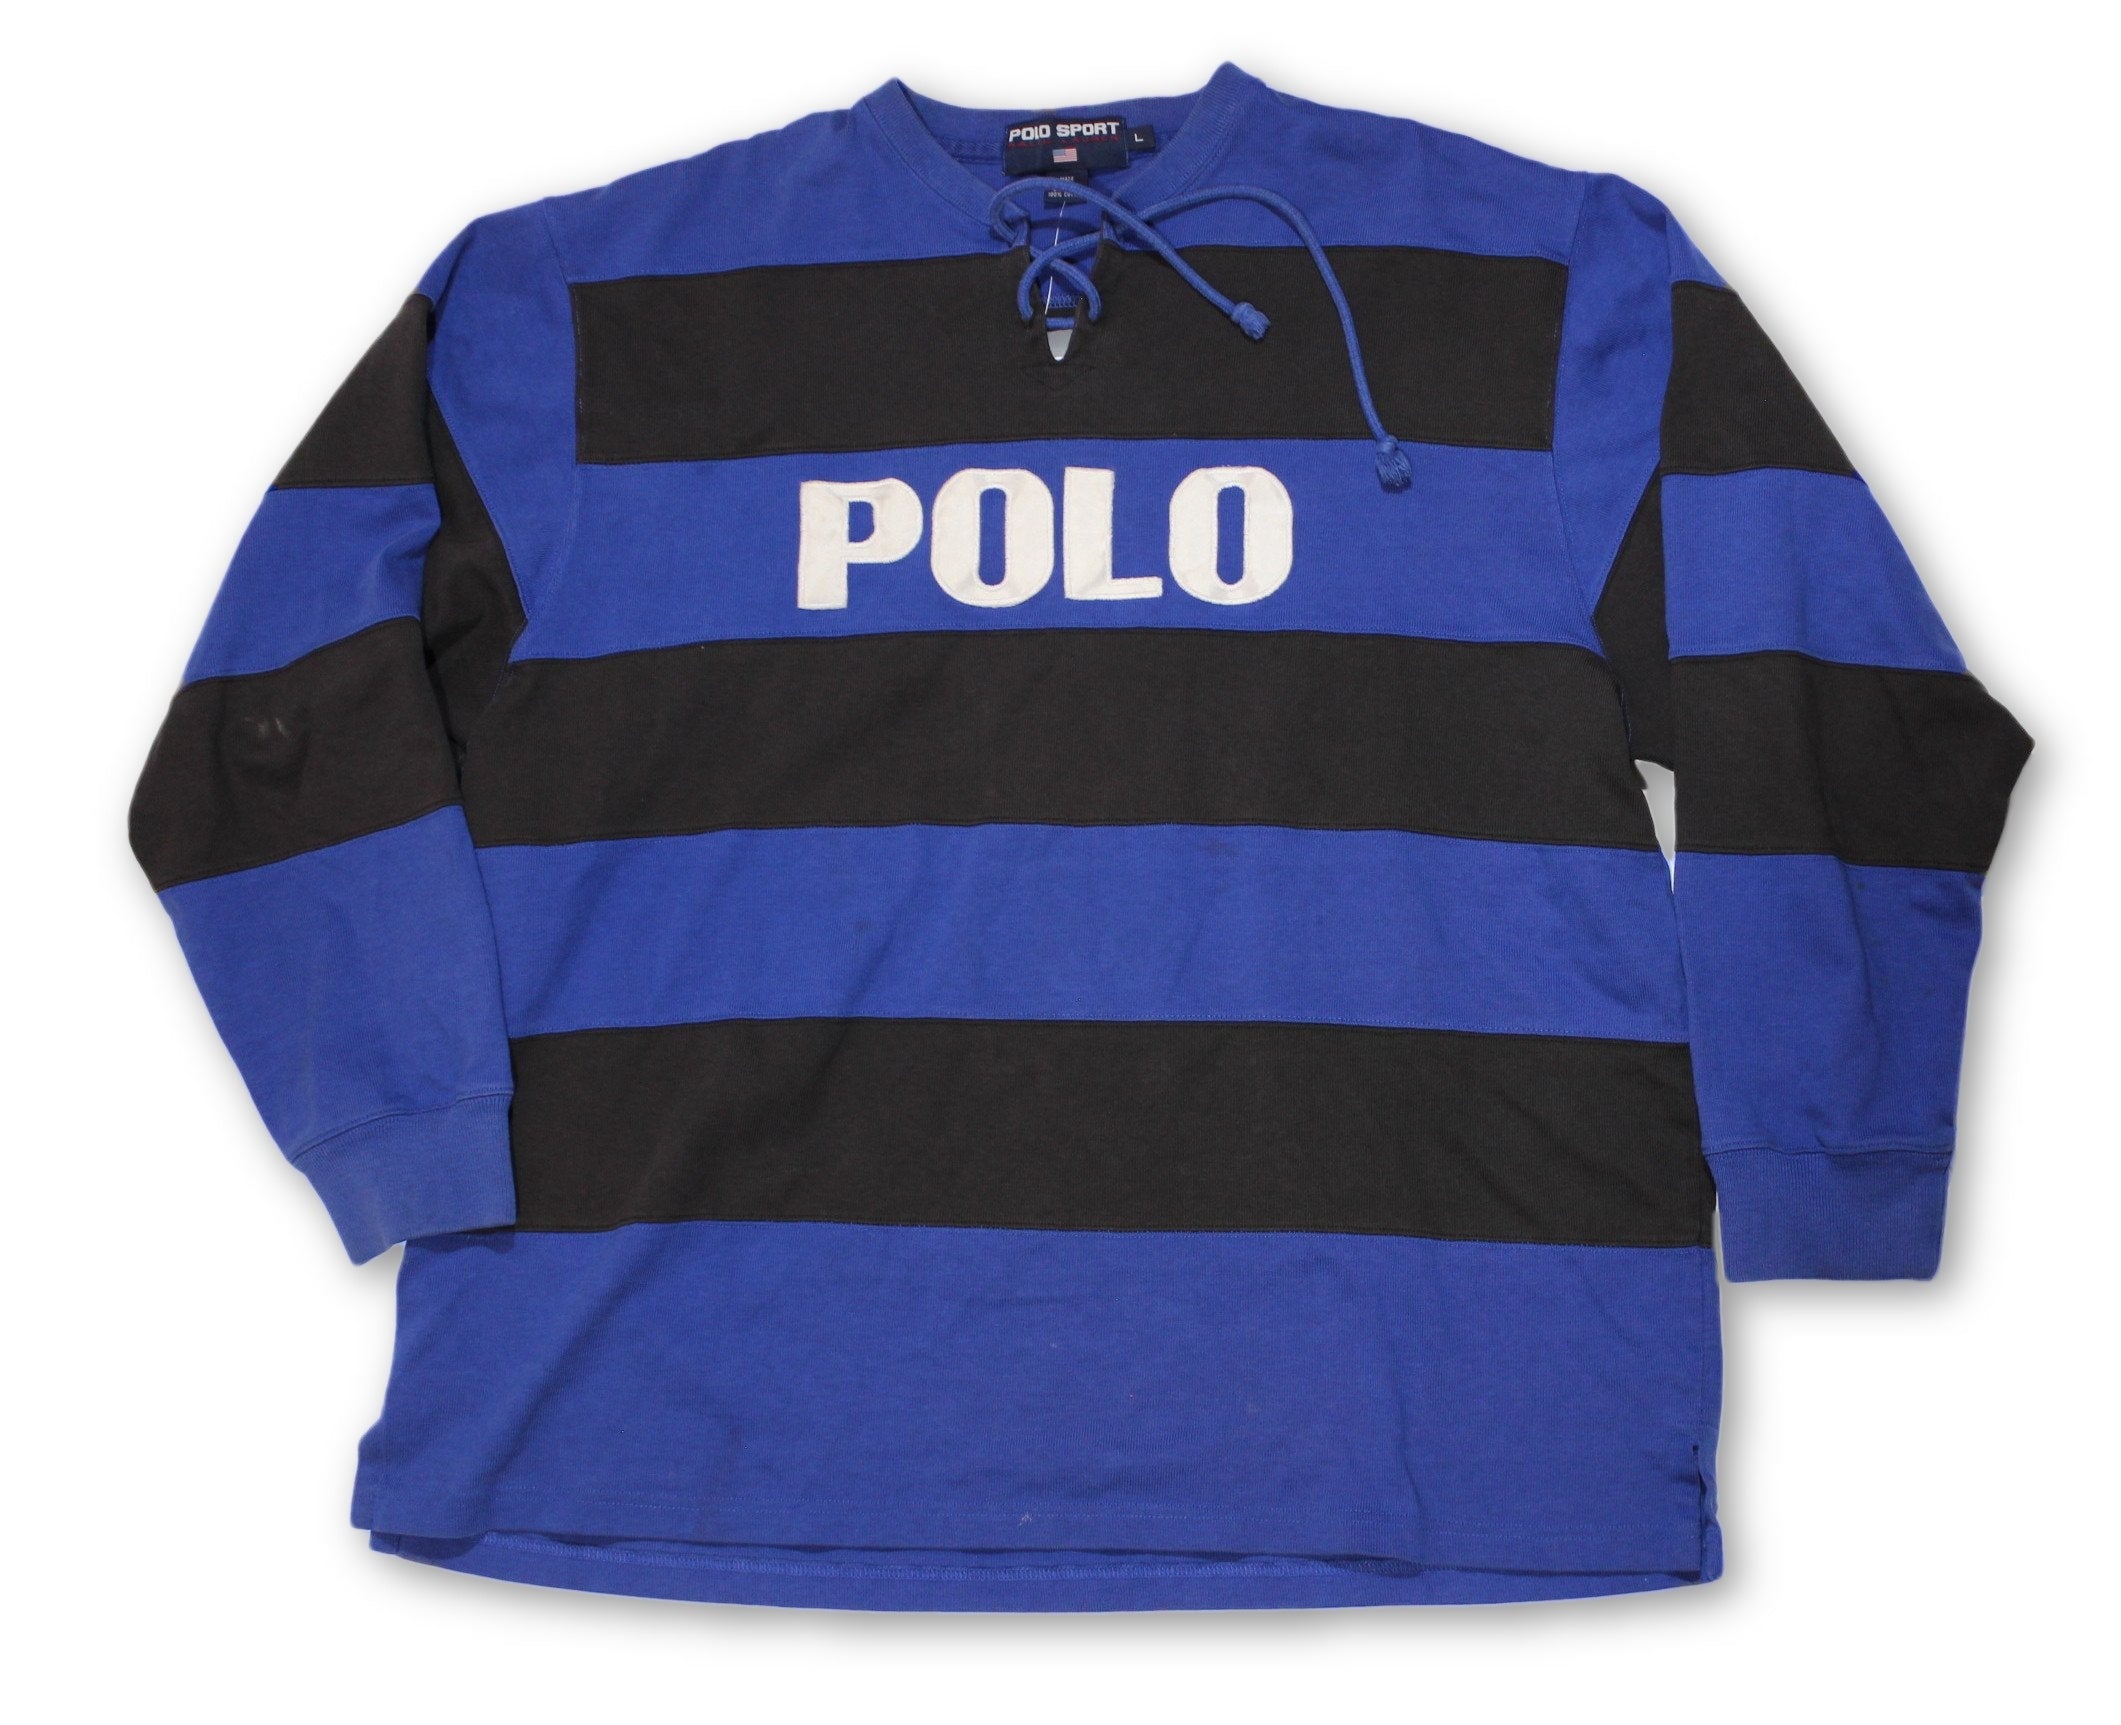 polo sport rugby sweatshirt